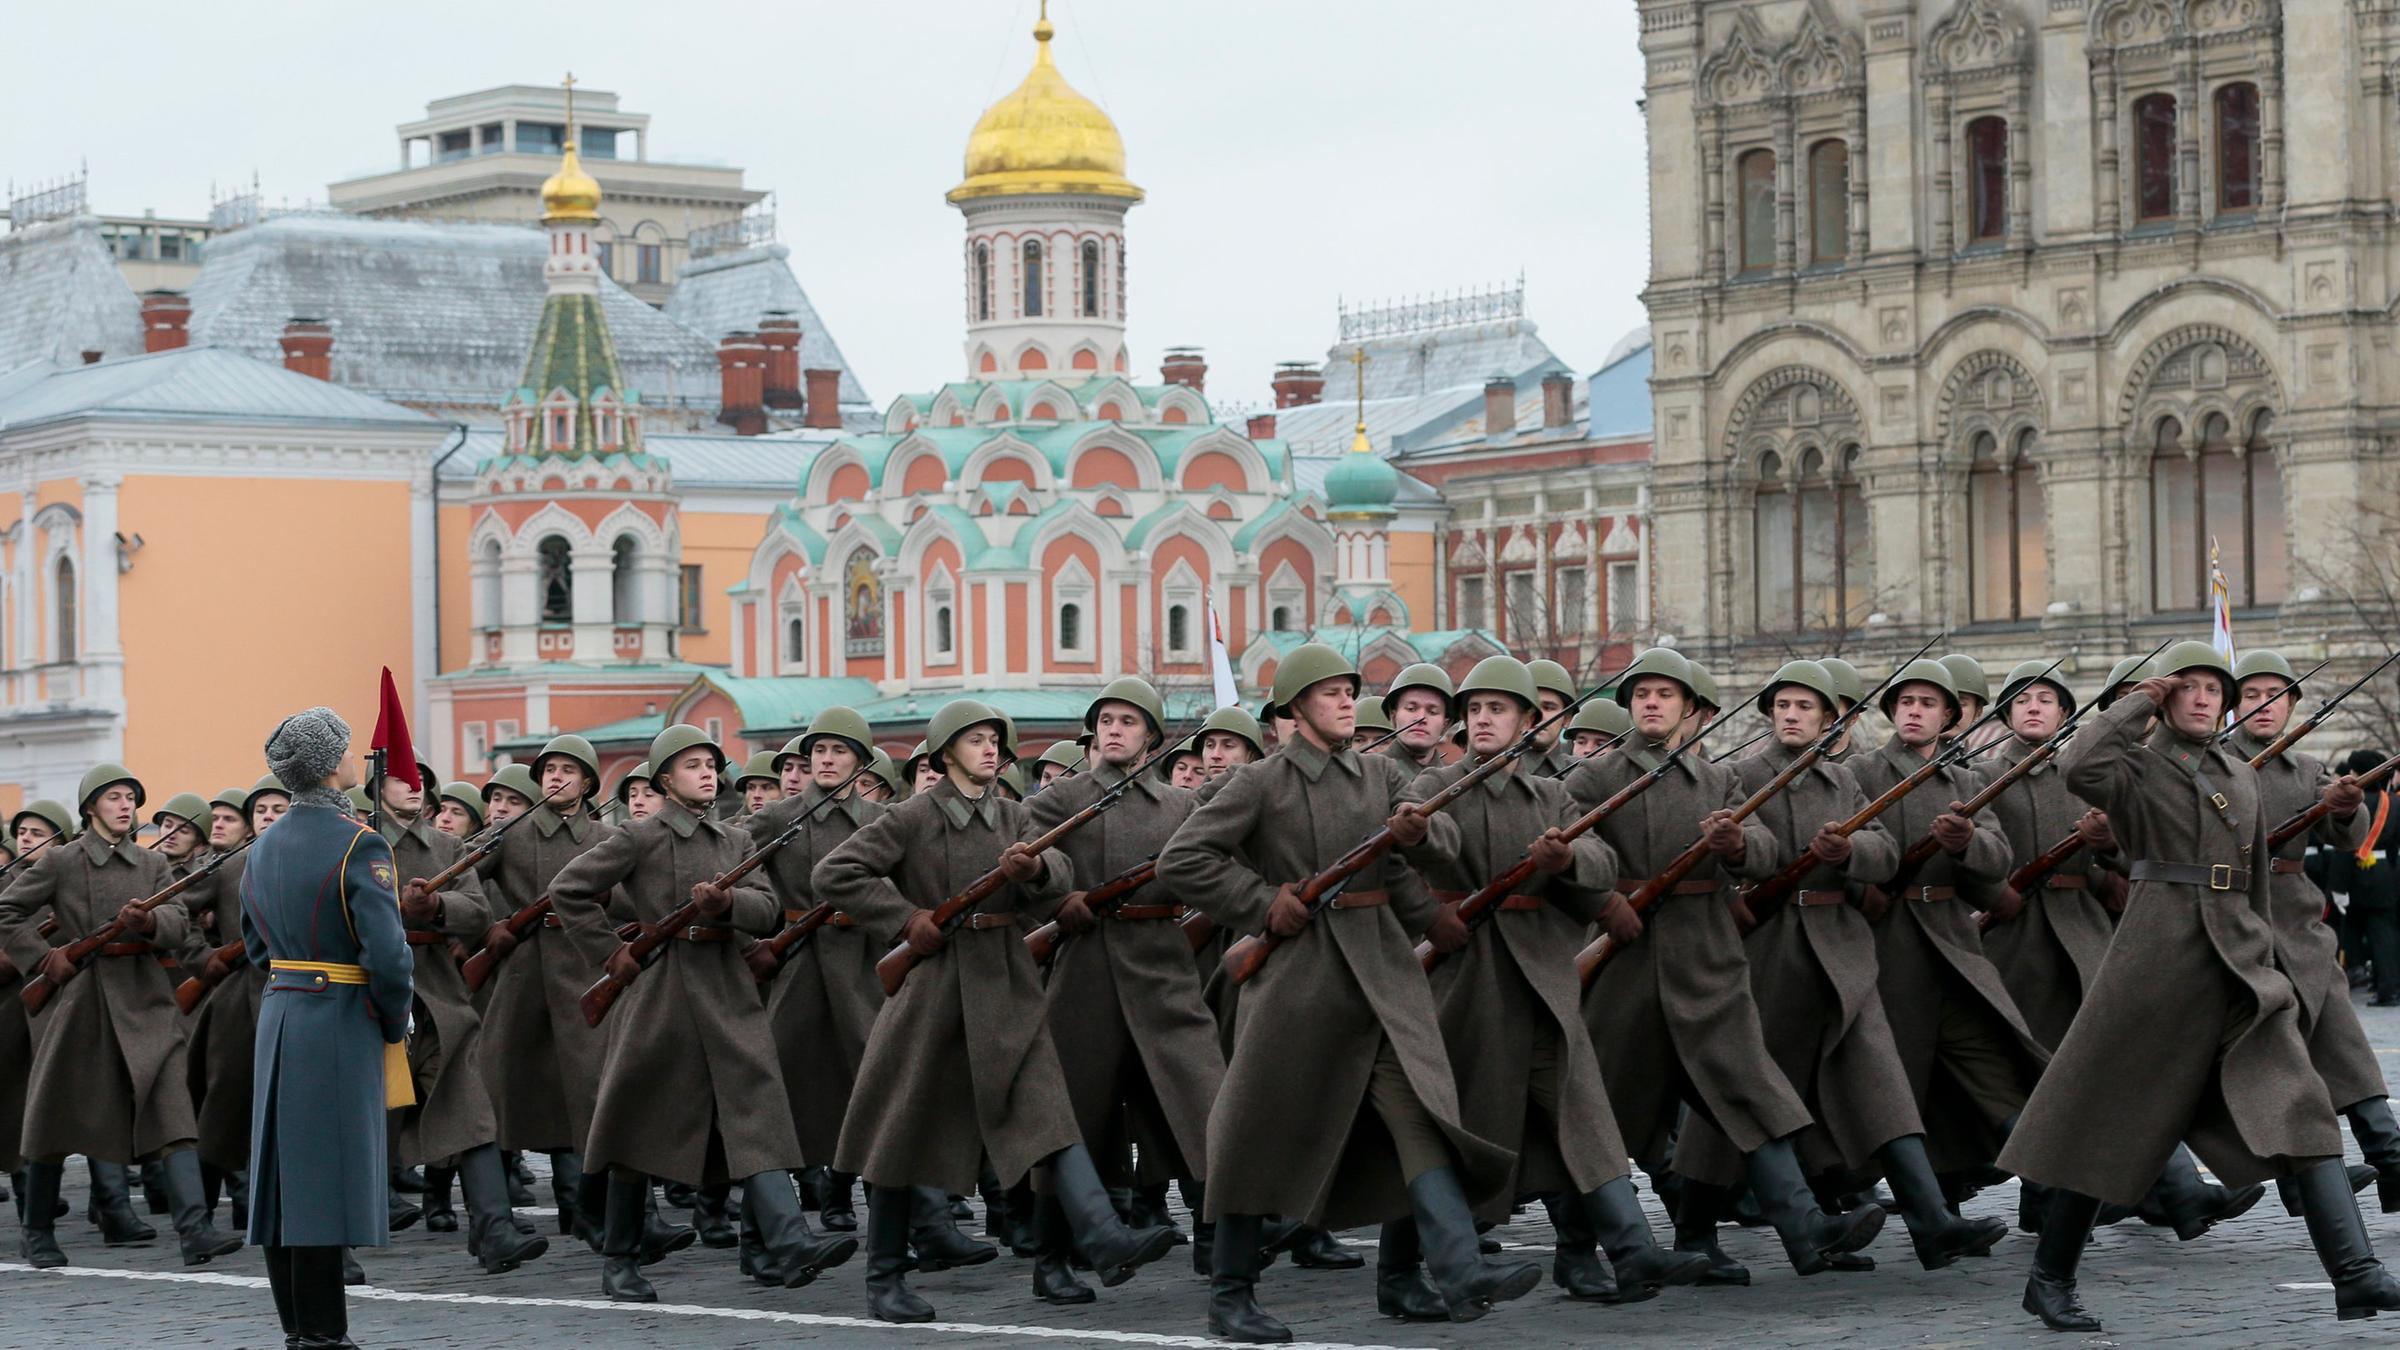 Юона парад на красной. Парад 7 ноября 1941. Парад 1941 года на красной площади. Парад на красной площади 7 ноября 1941. Фото парада 7 ноября 1941 года на красной площади в Москве.